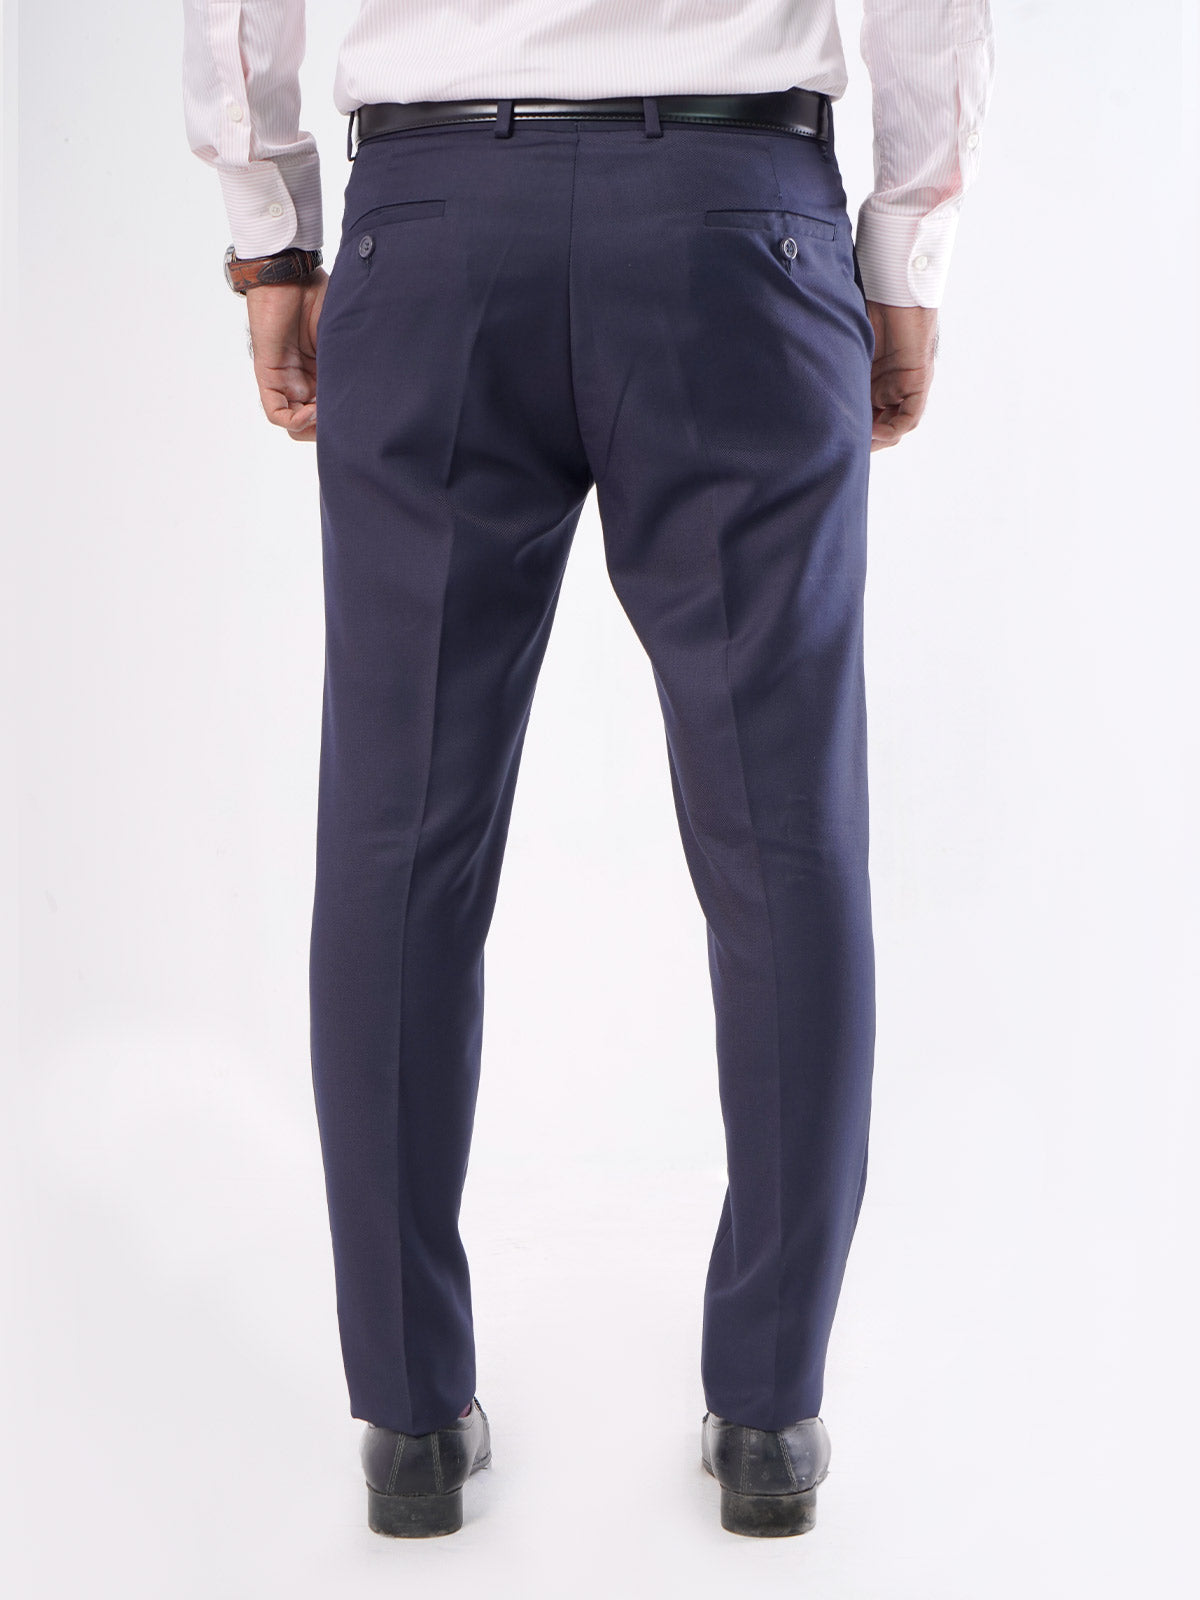 Navy Blue Plain Executive Formal Dress Trouser (FDT-137)